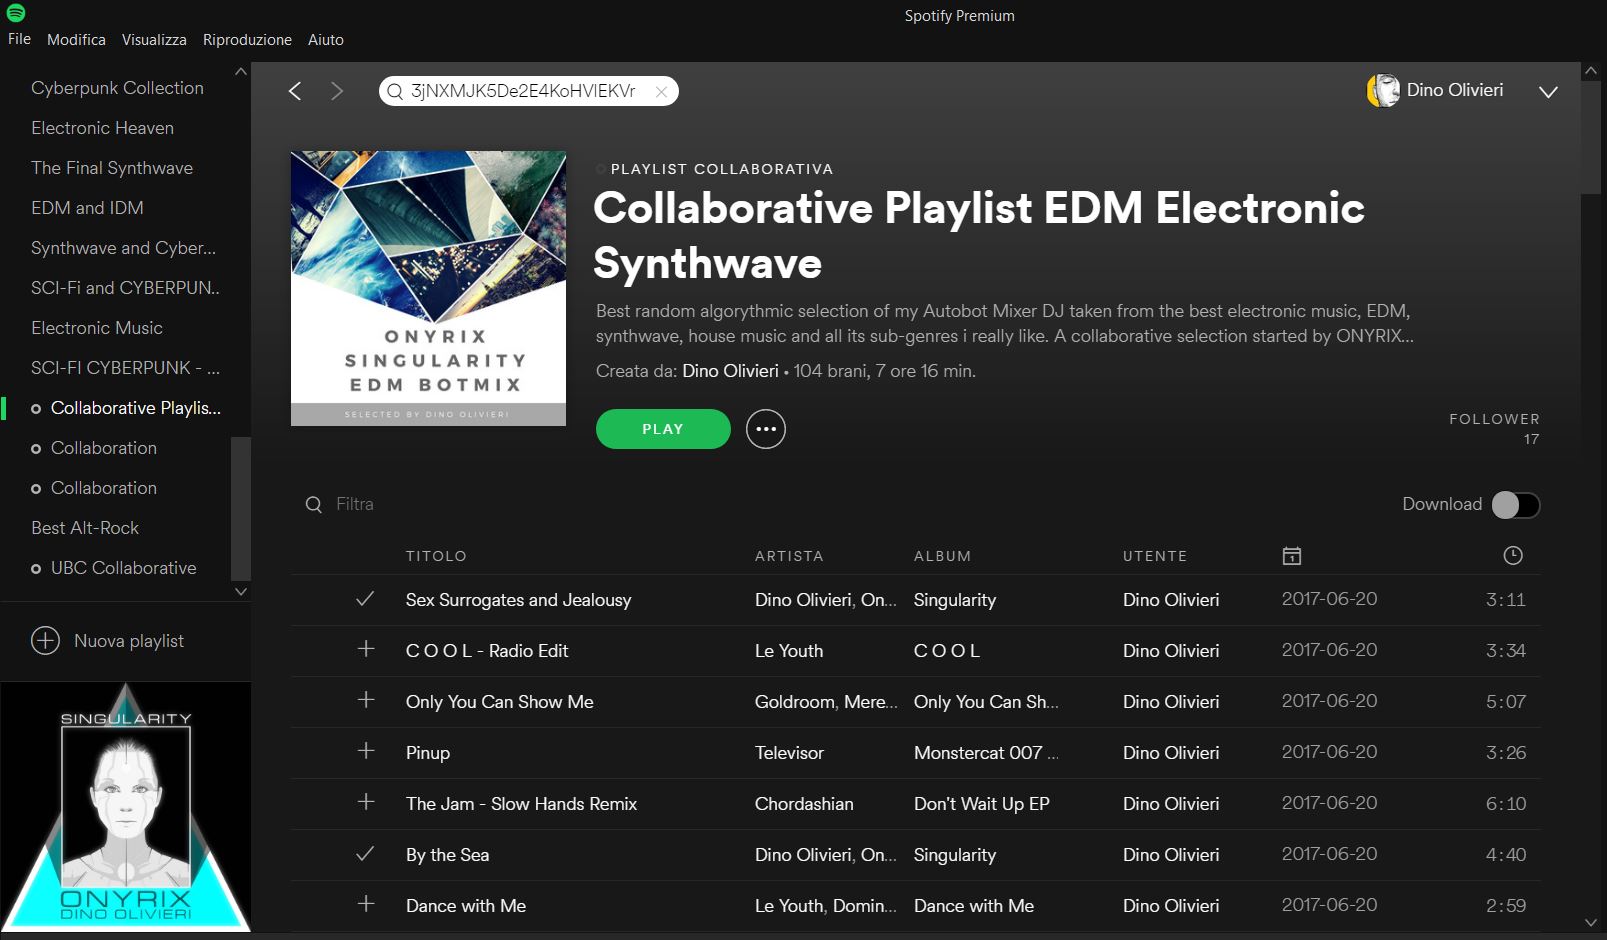 List of collaborative spotify playlists